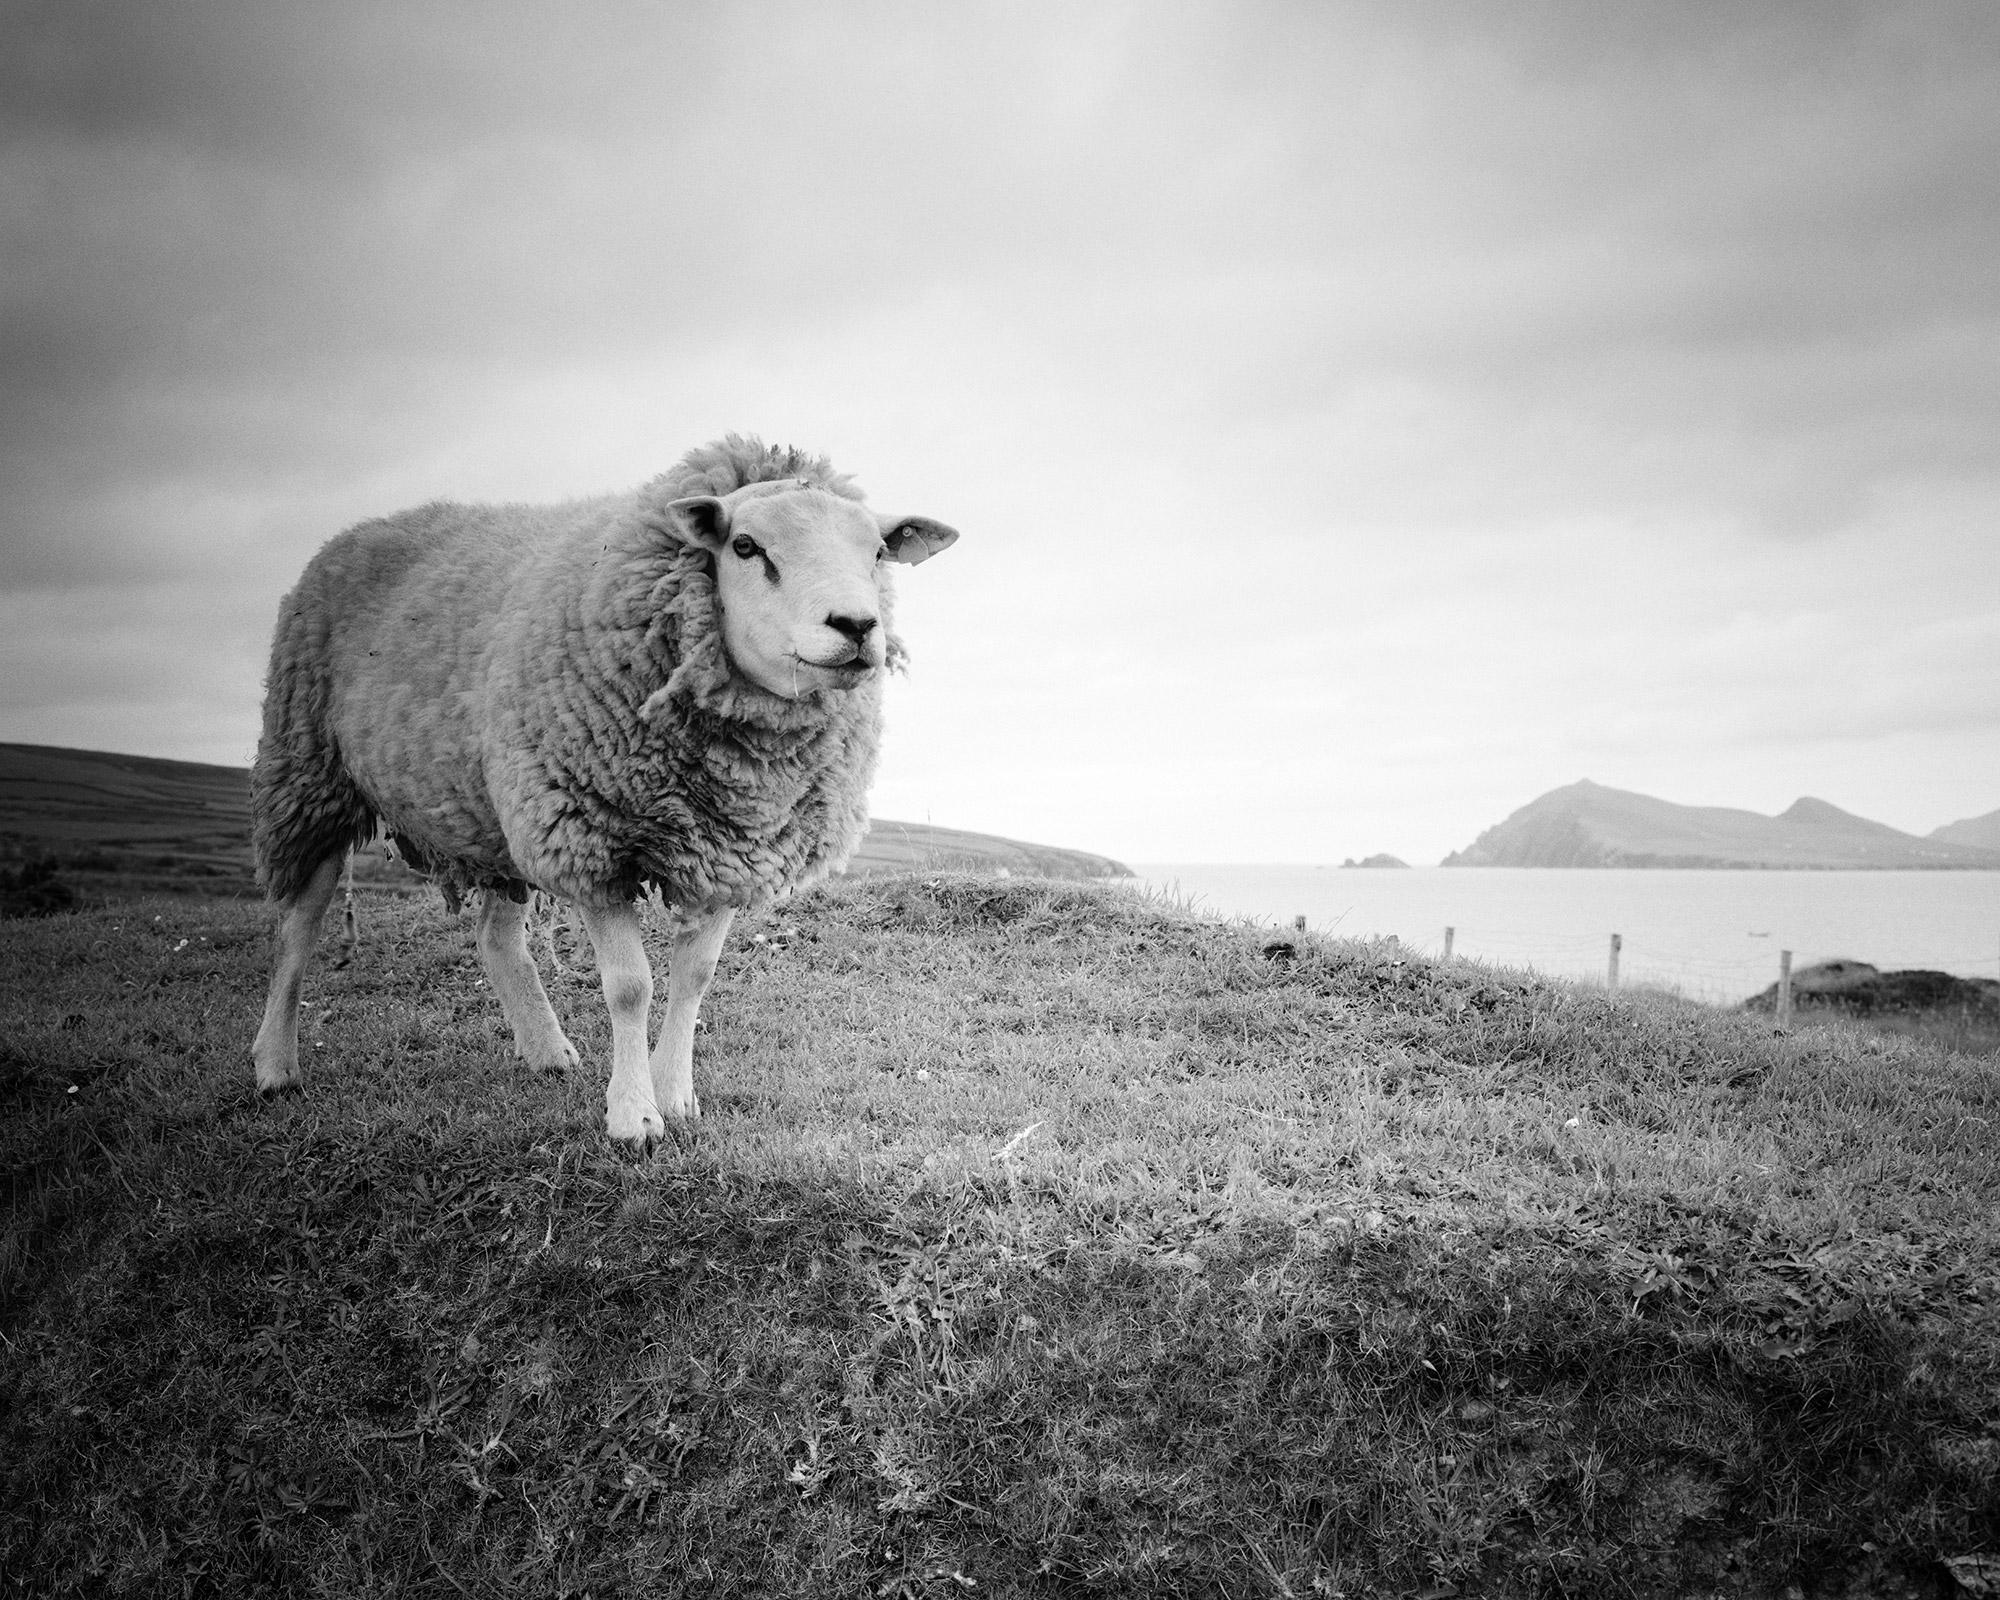 Bucky the Sheep Ireland black and white fine art landscape photography print